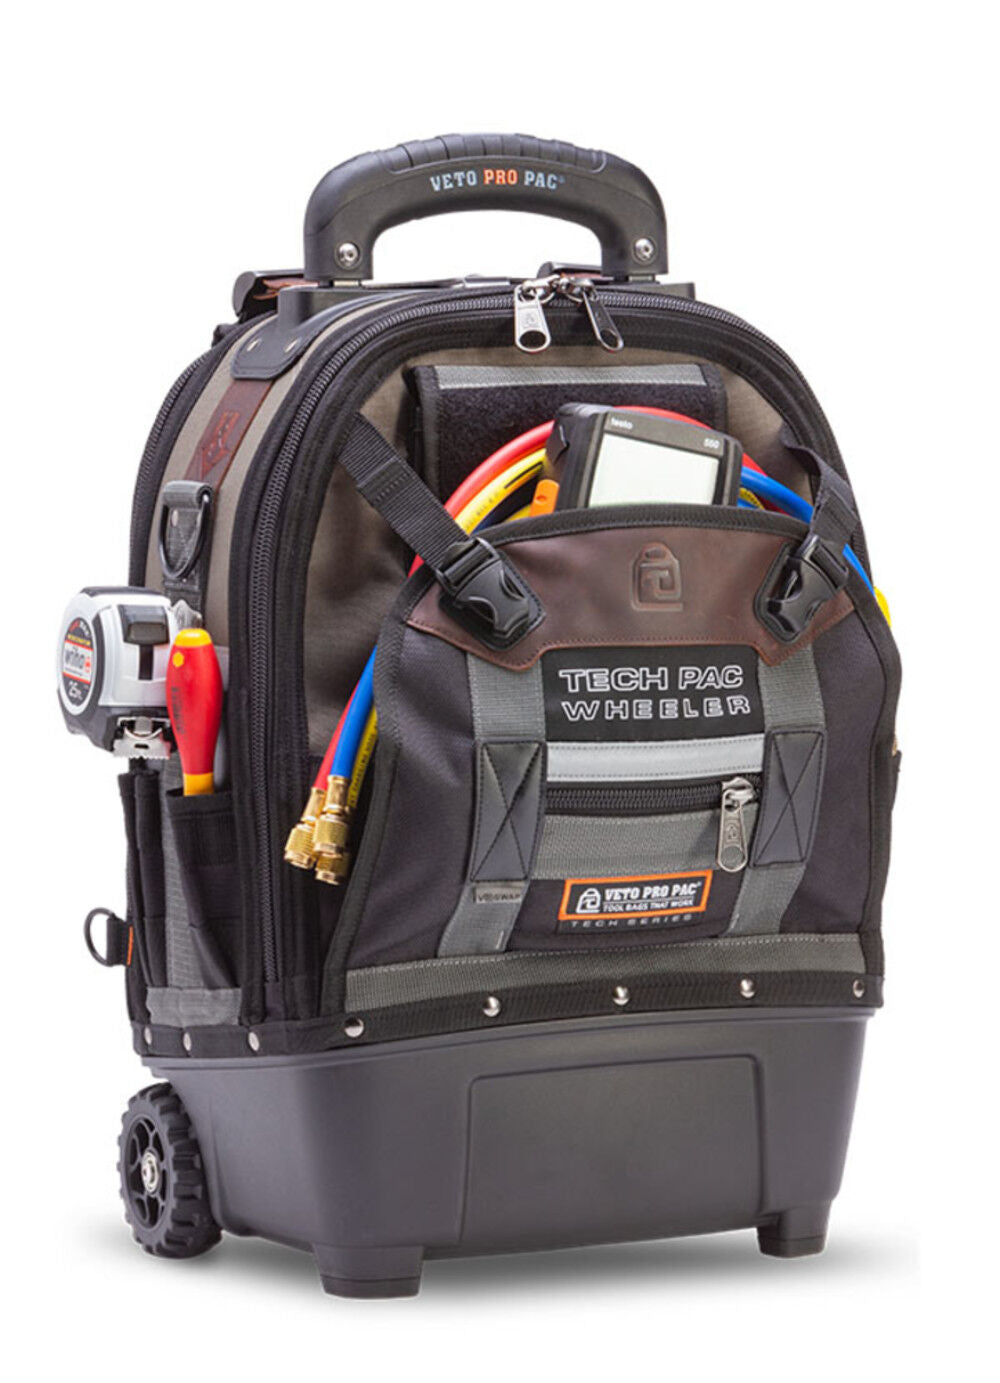 Backpack Tool Bag on Wheels TECH PAC WHEELER